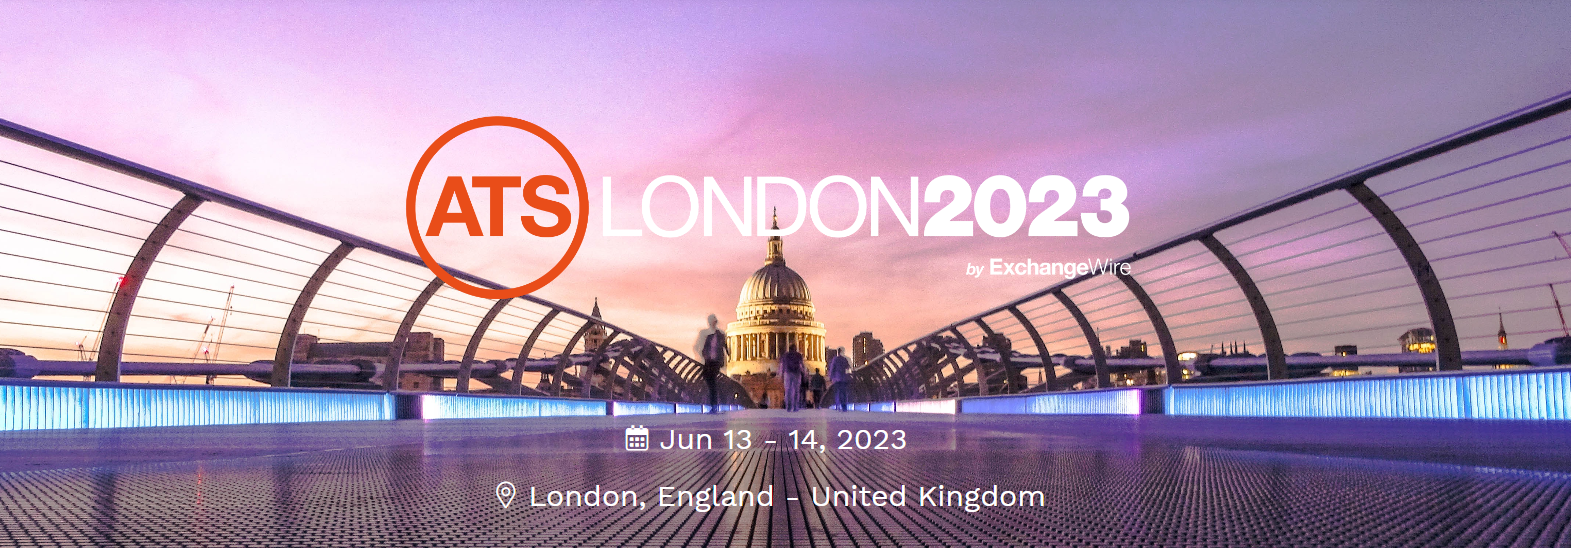 ATS London 2023 Reframing The Future of Media, Marketing & Commerce